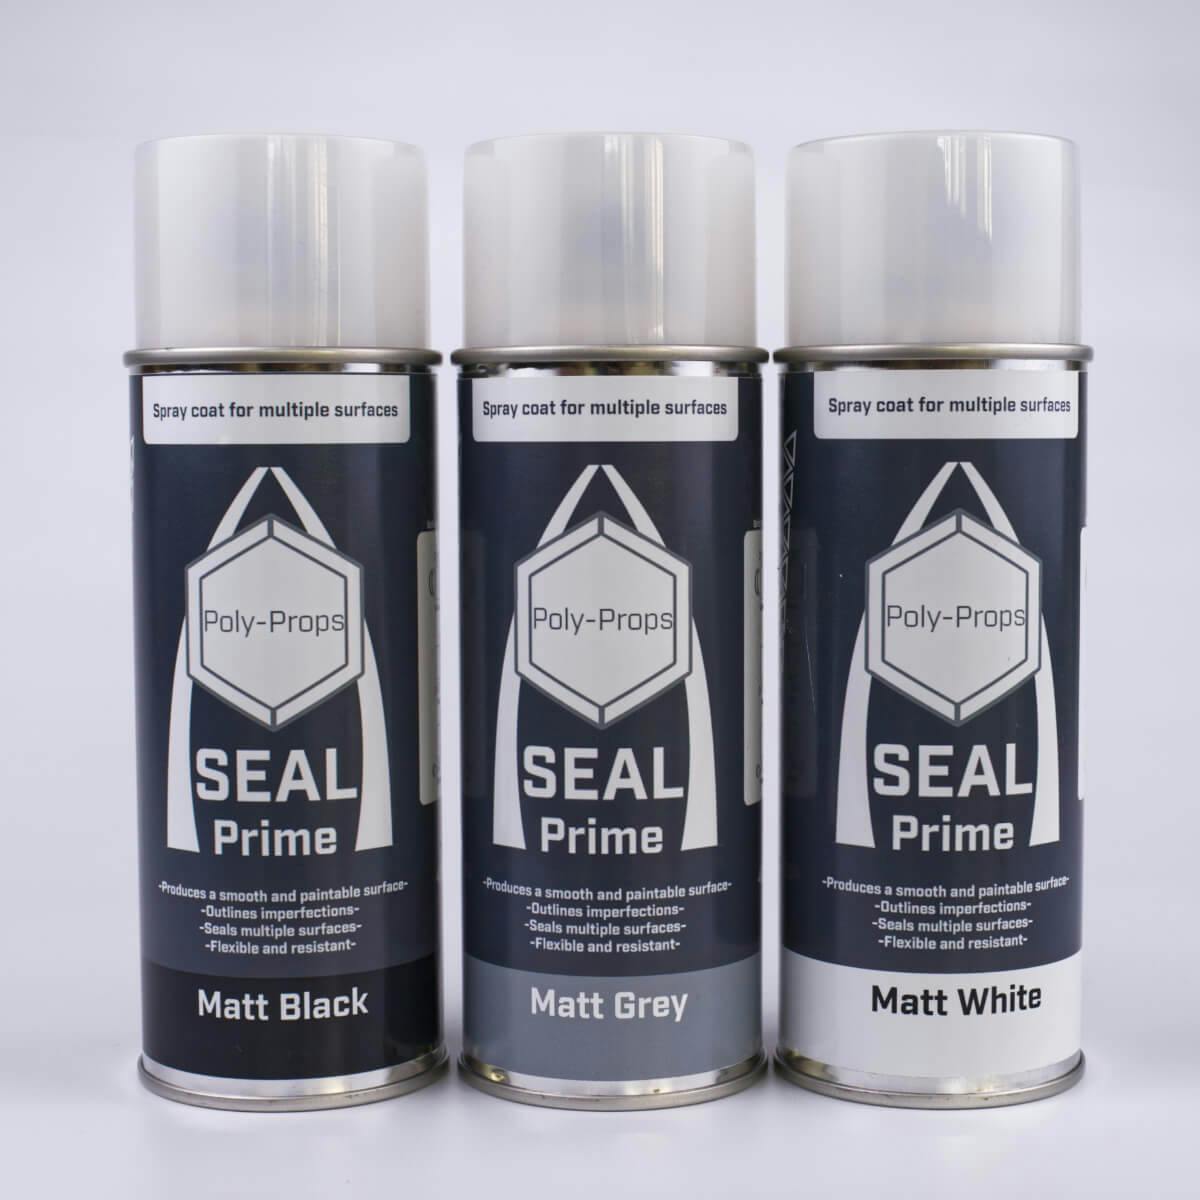 All shades of Seal Prime spray primer